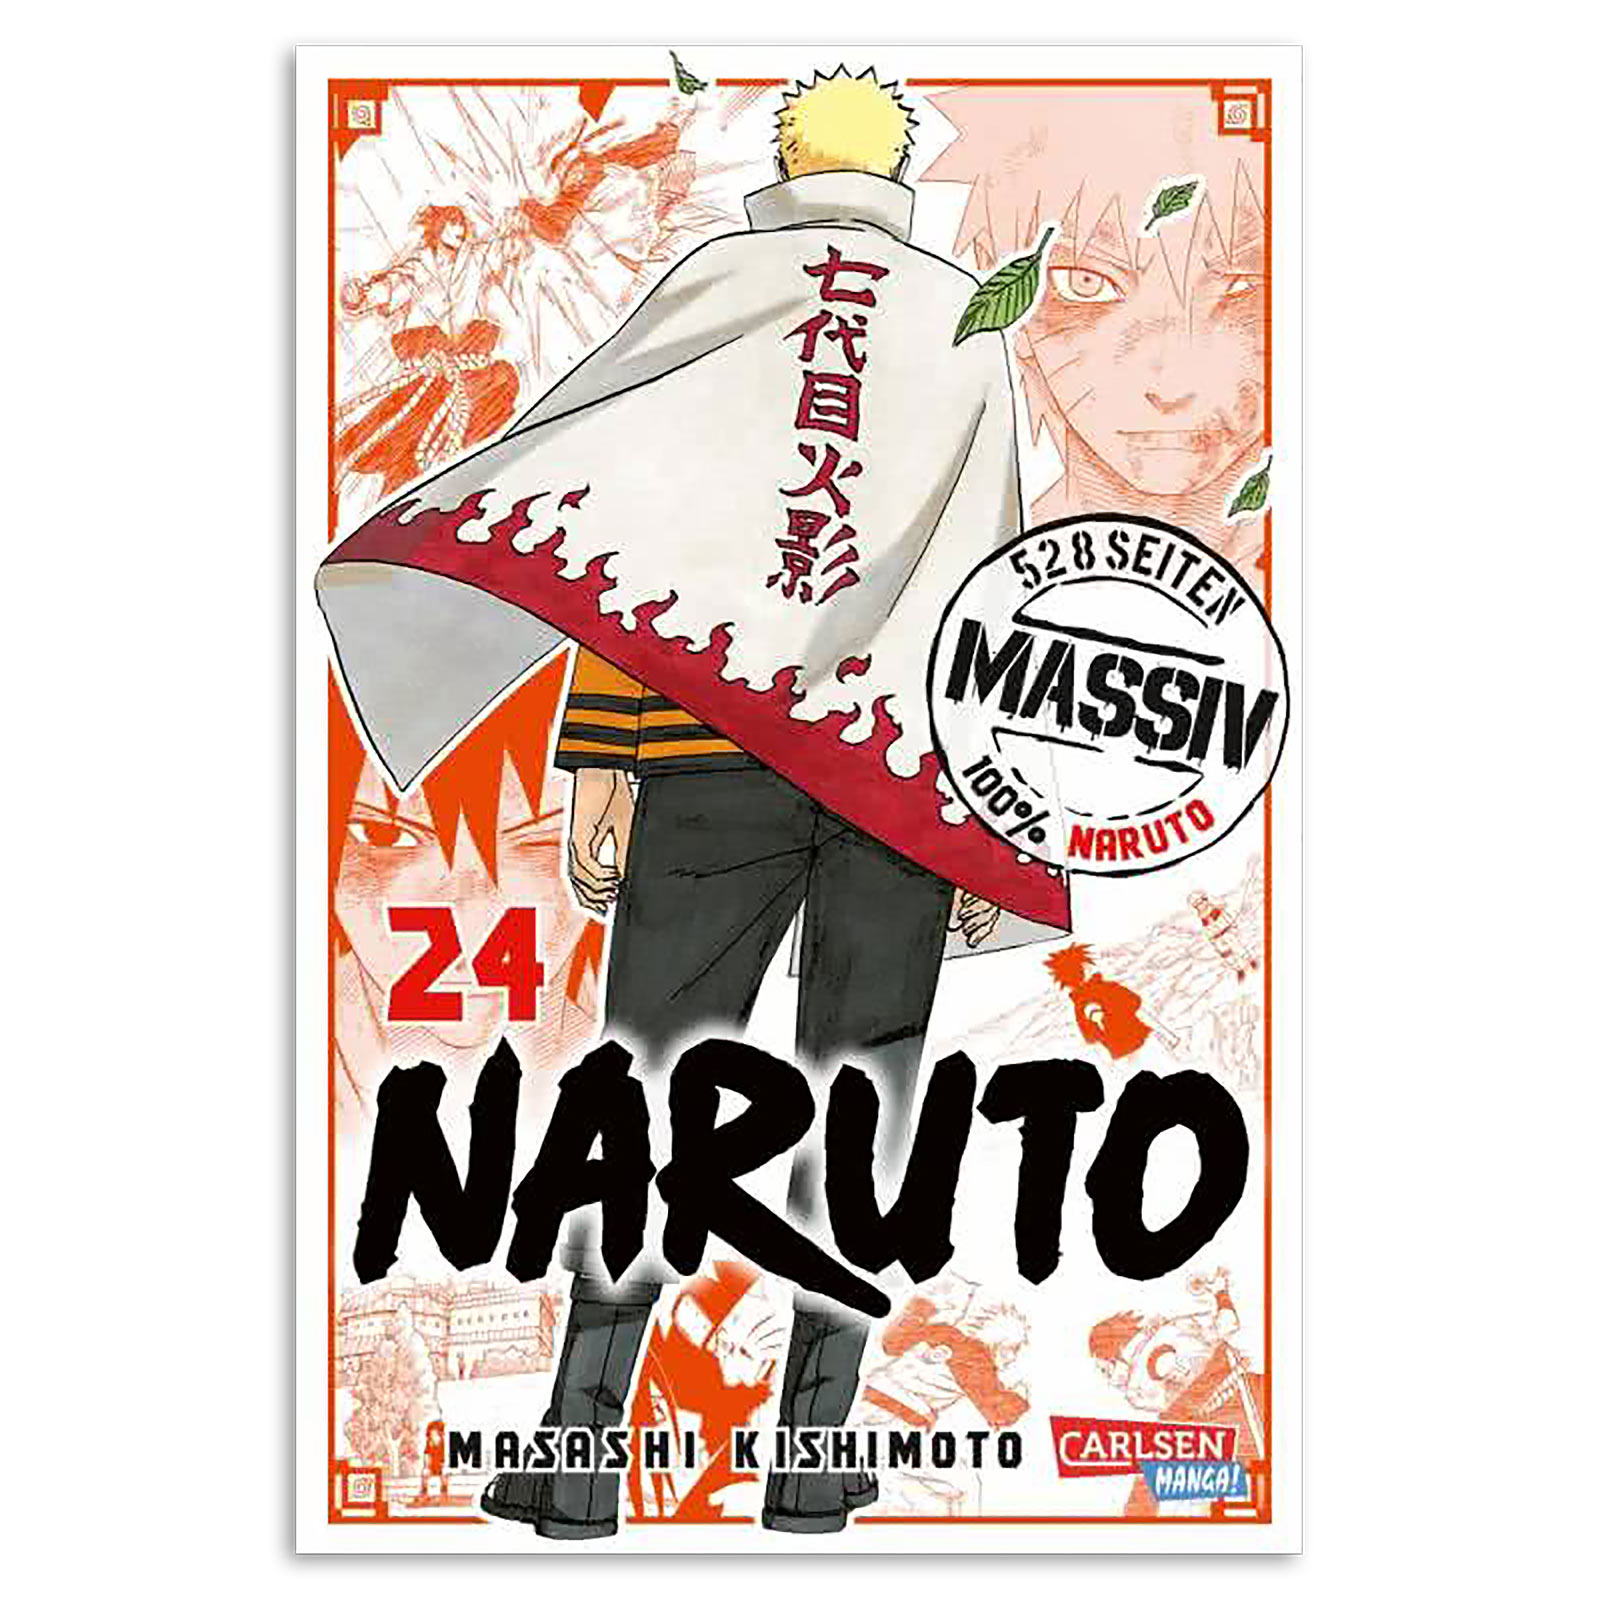 Naruto - Omnibus 24 Paperback